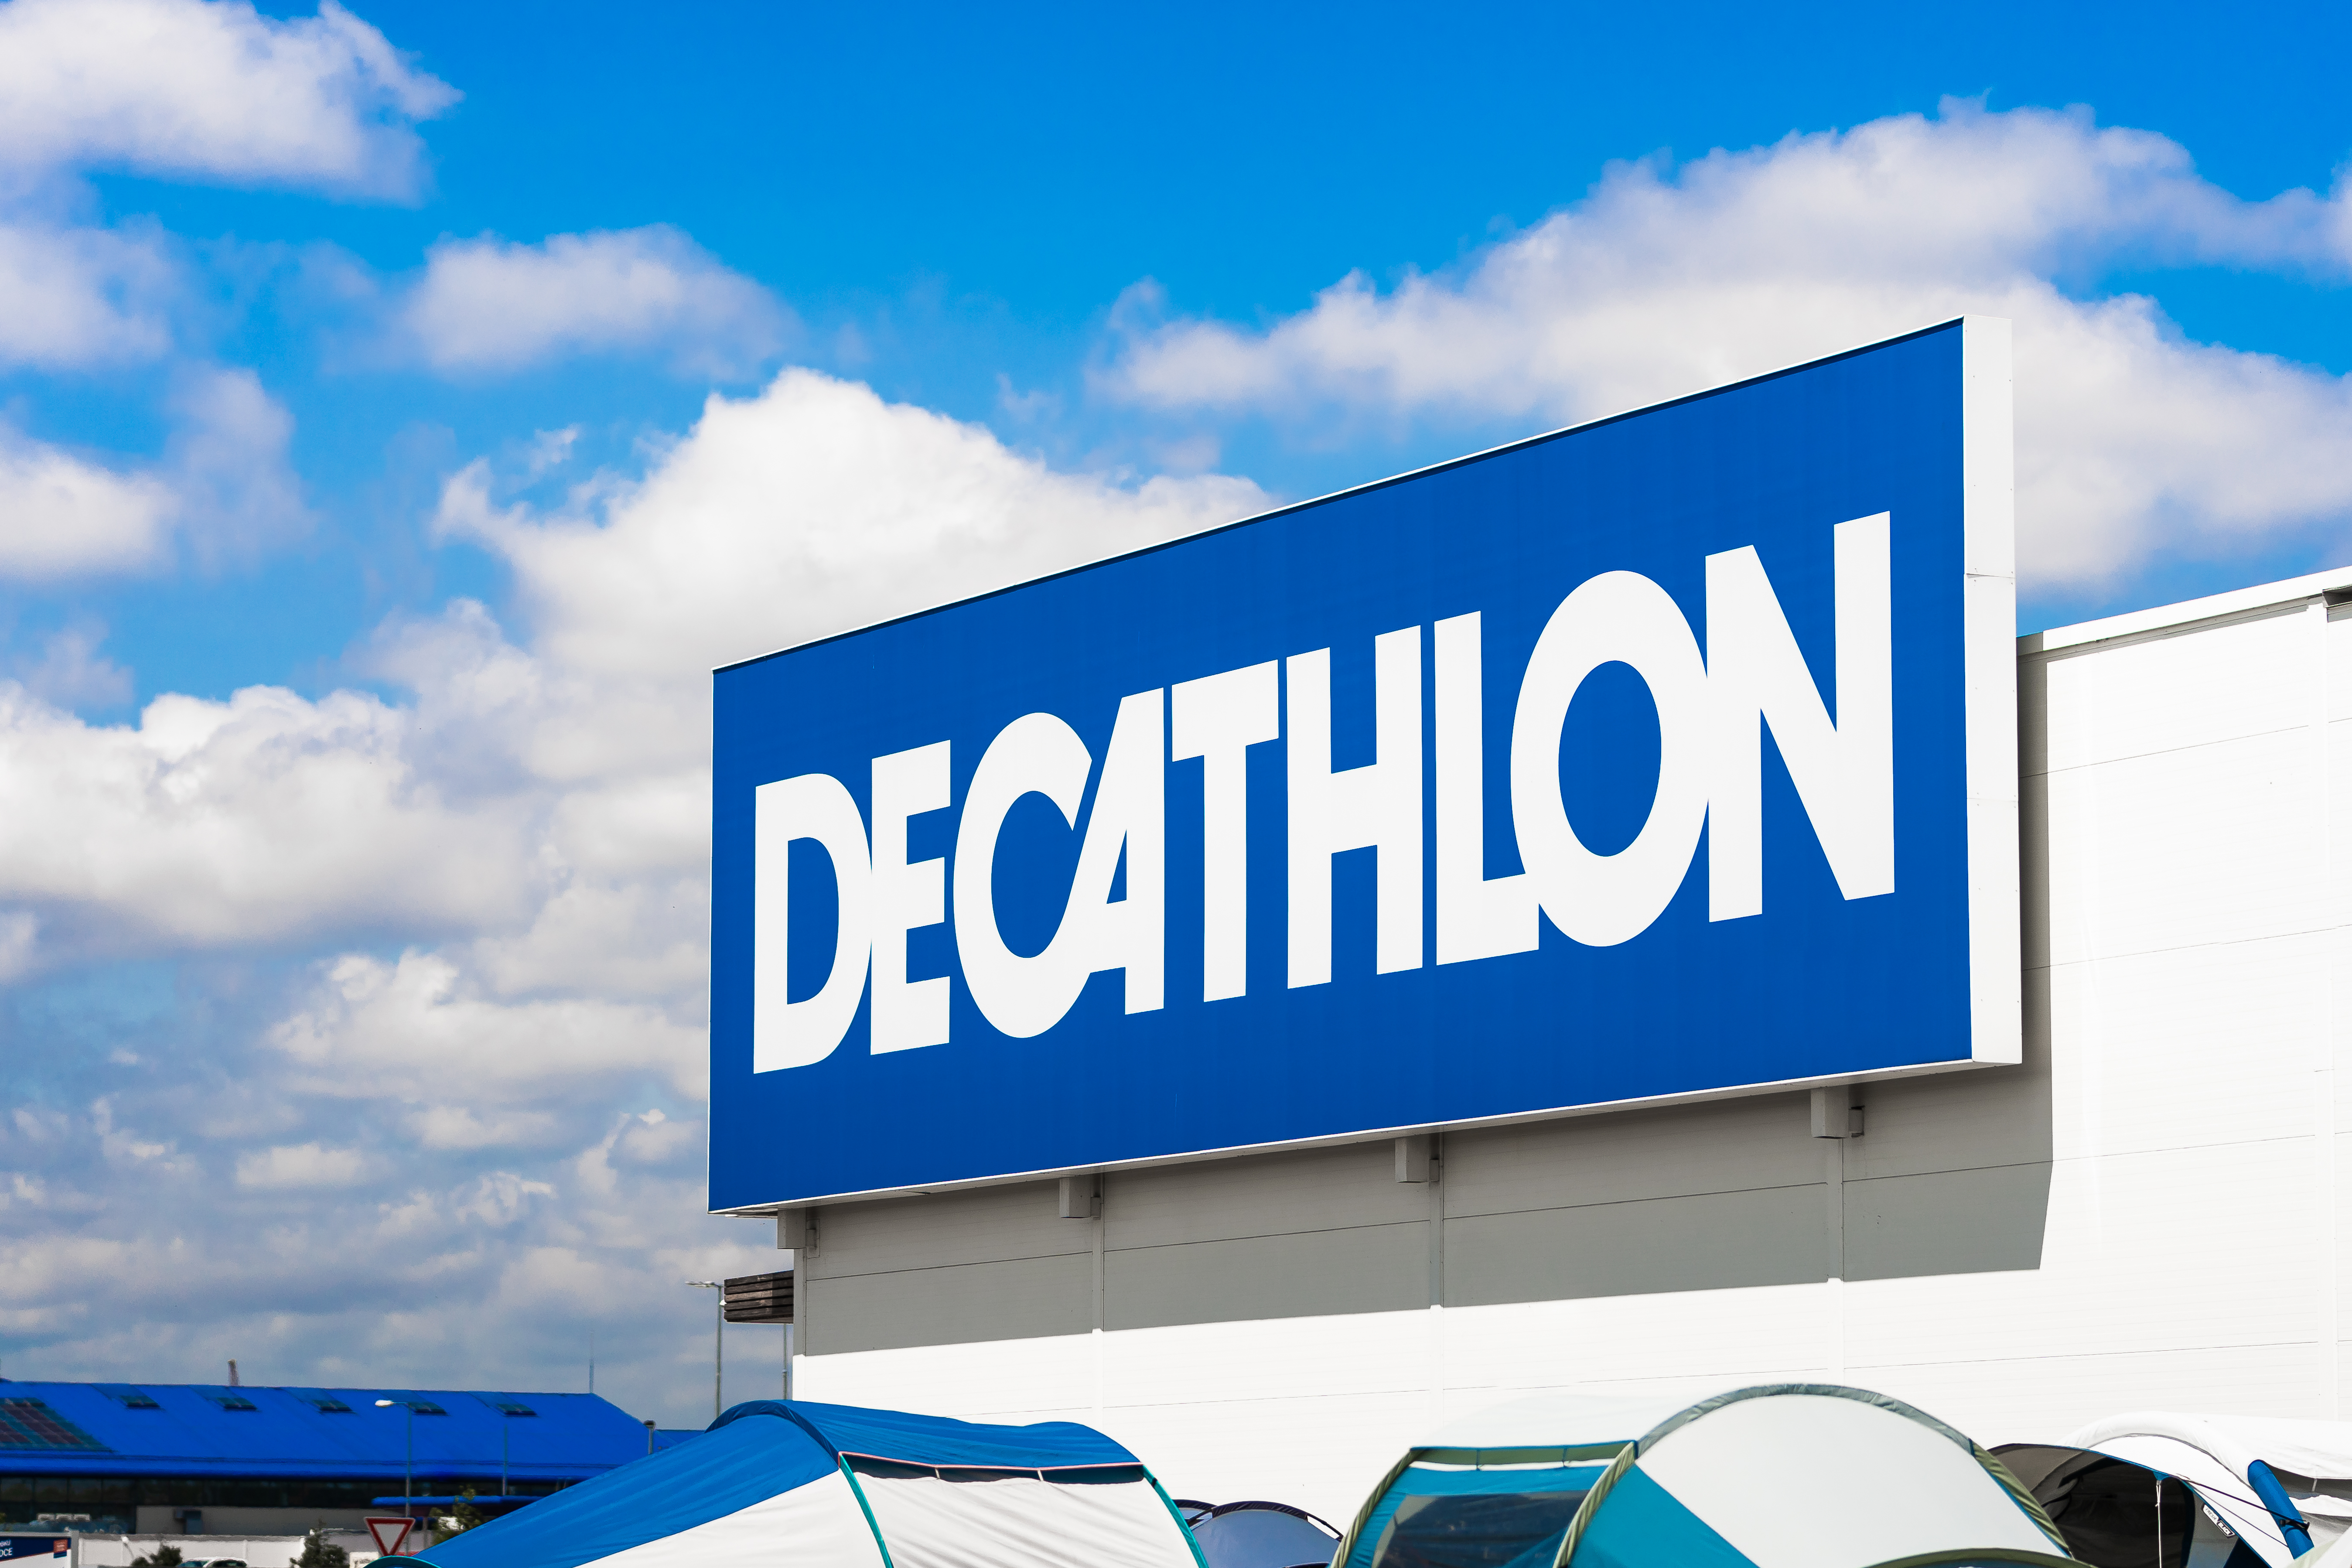 875 Decathlon Store Stock Photos - Free & Royalty-Free Stock